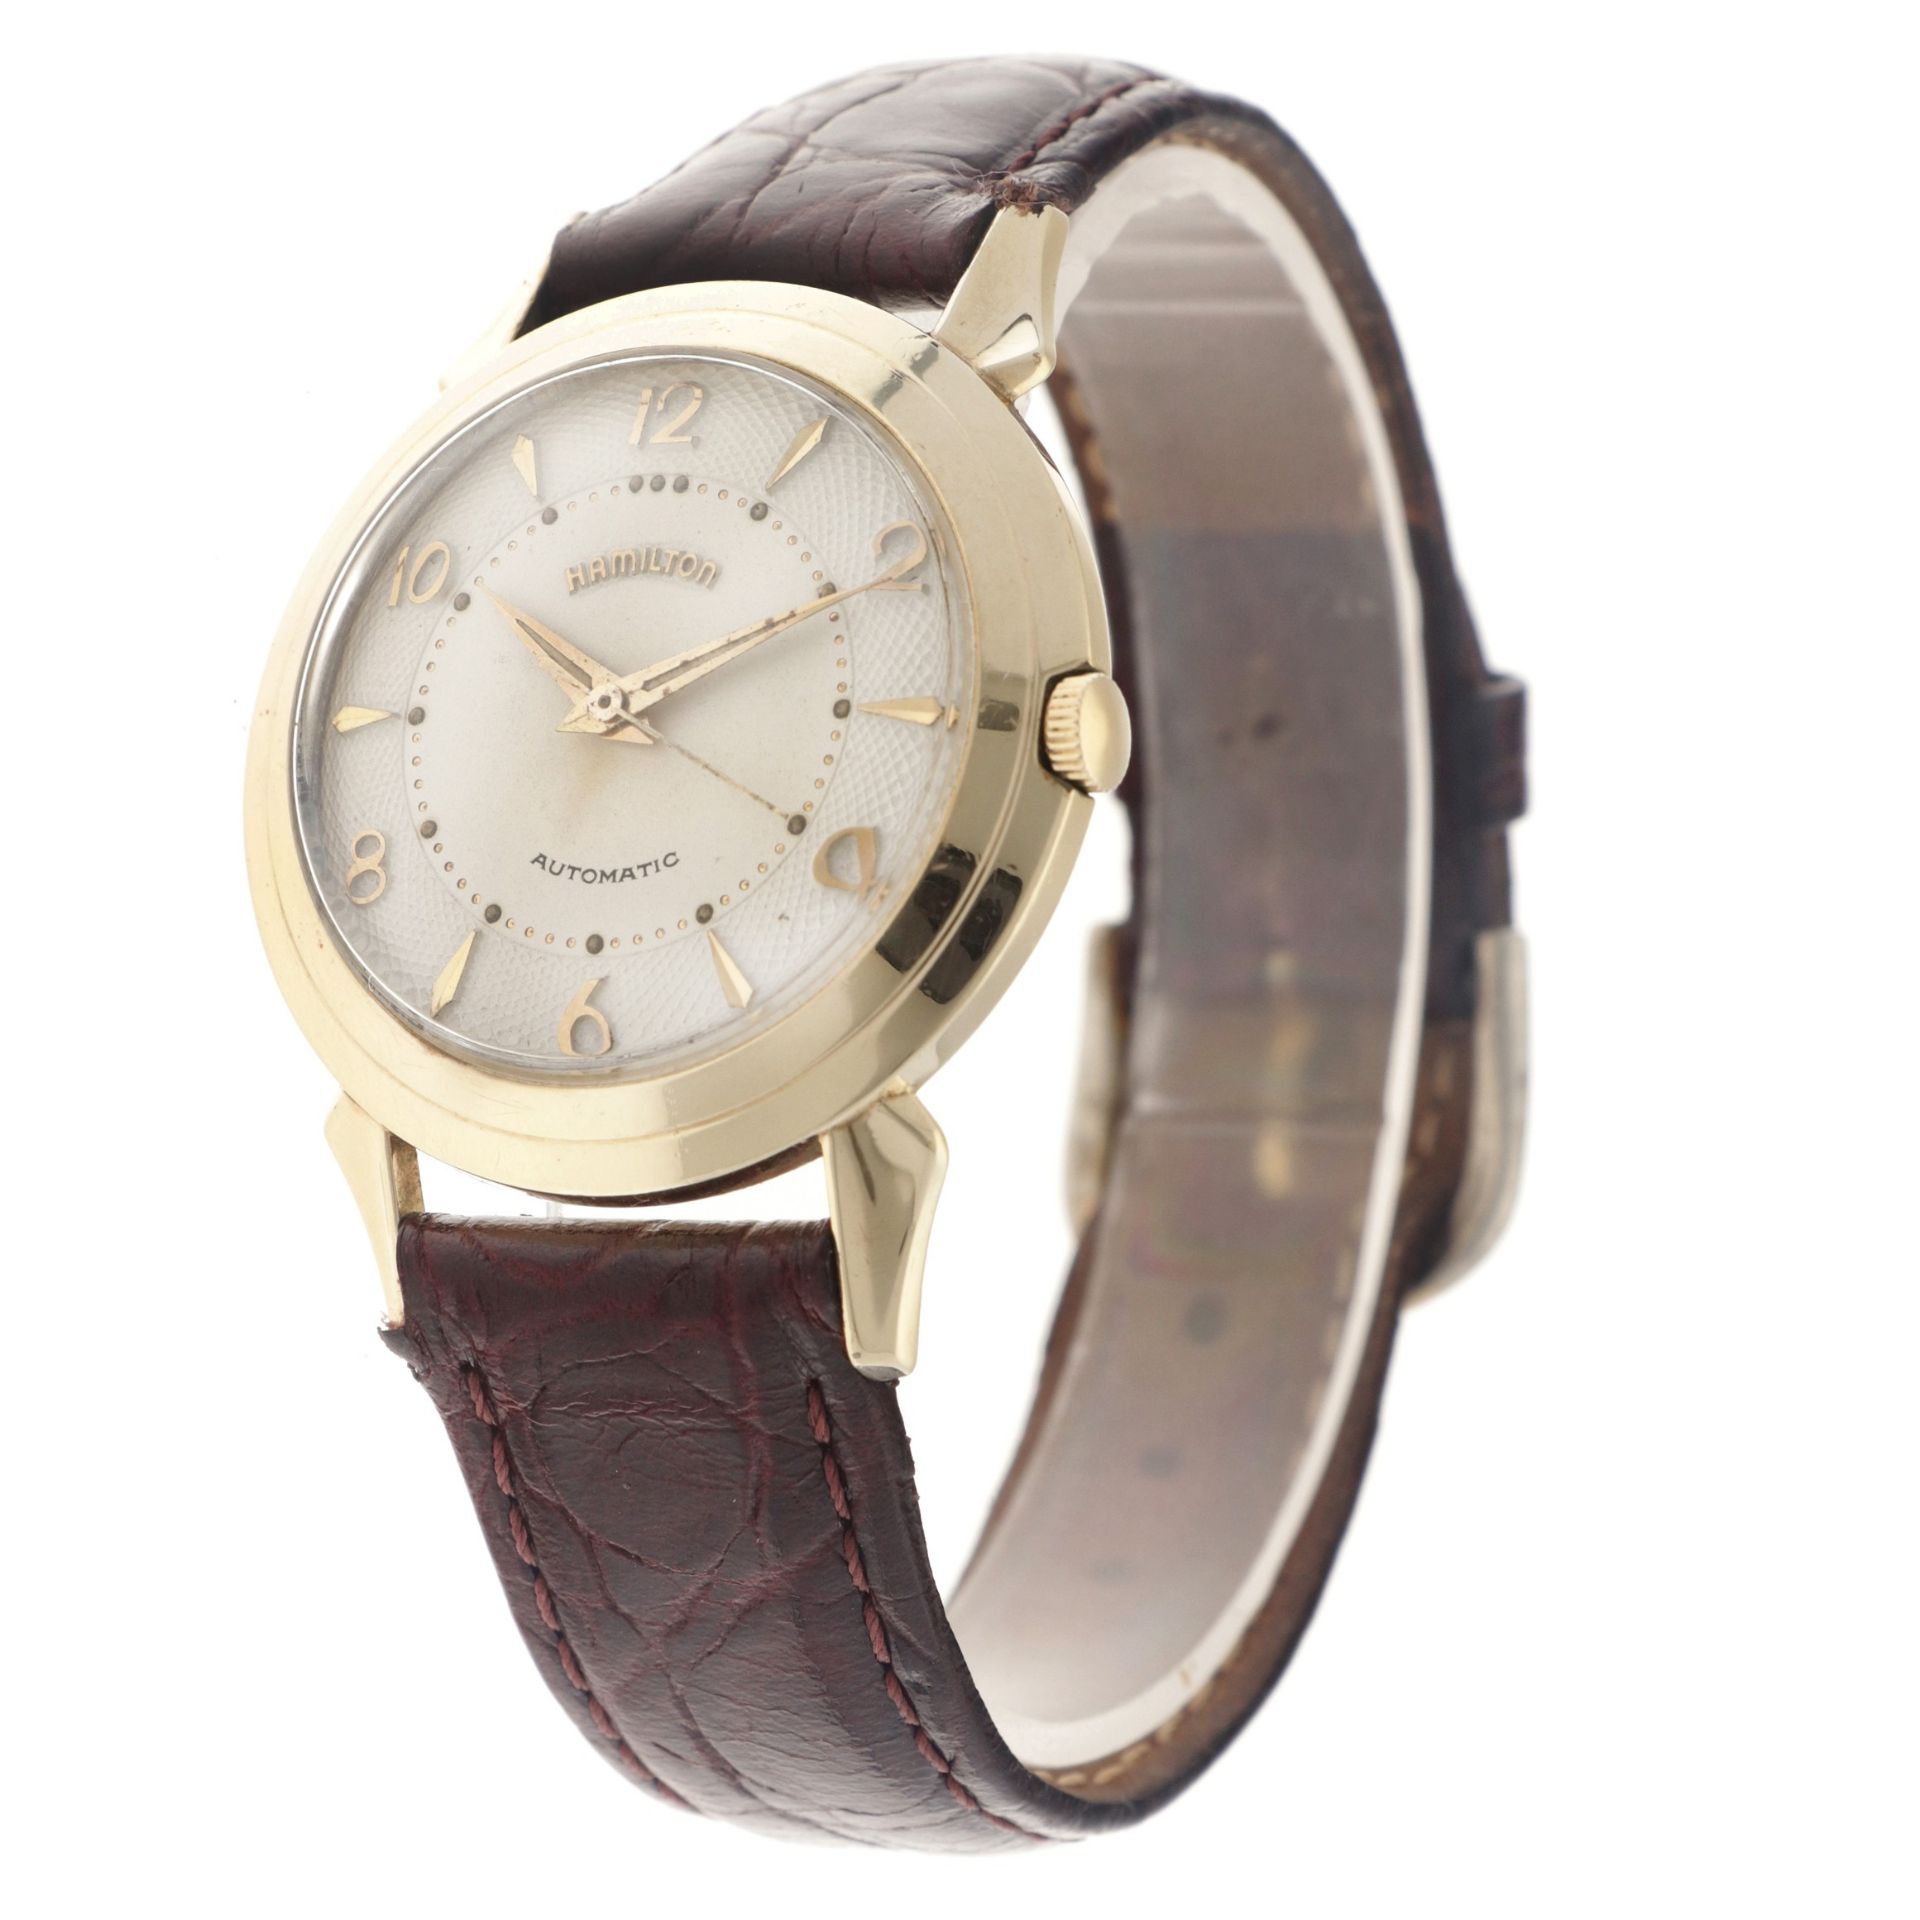 No Reserve - Hamilton Vintage - Men's watch. - Image 2 of 7